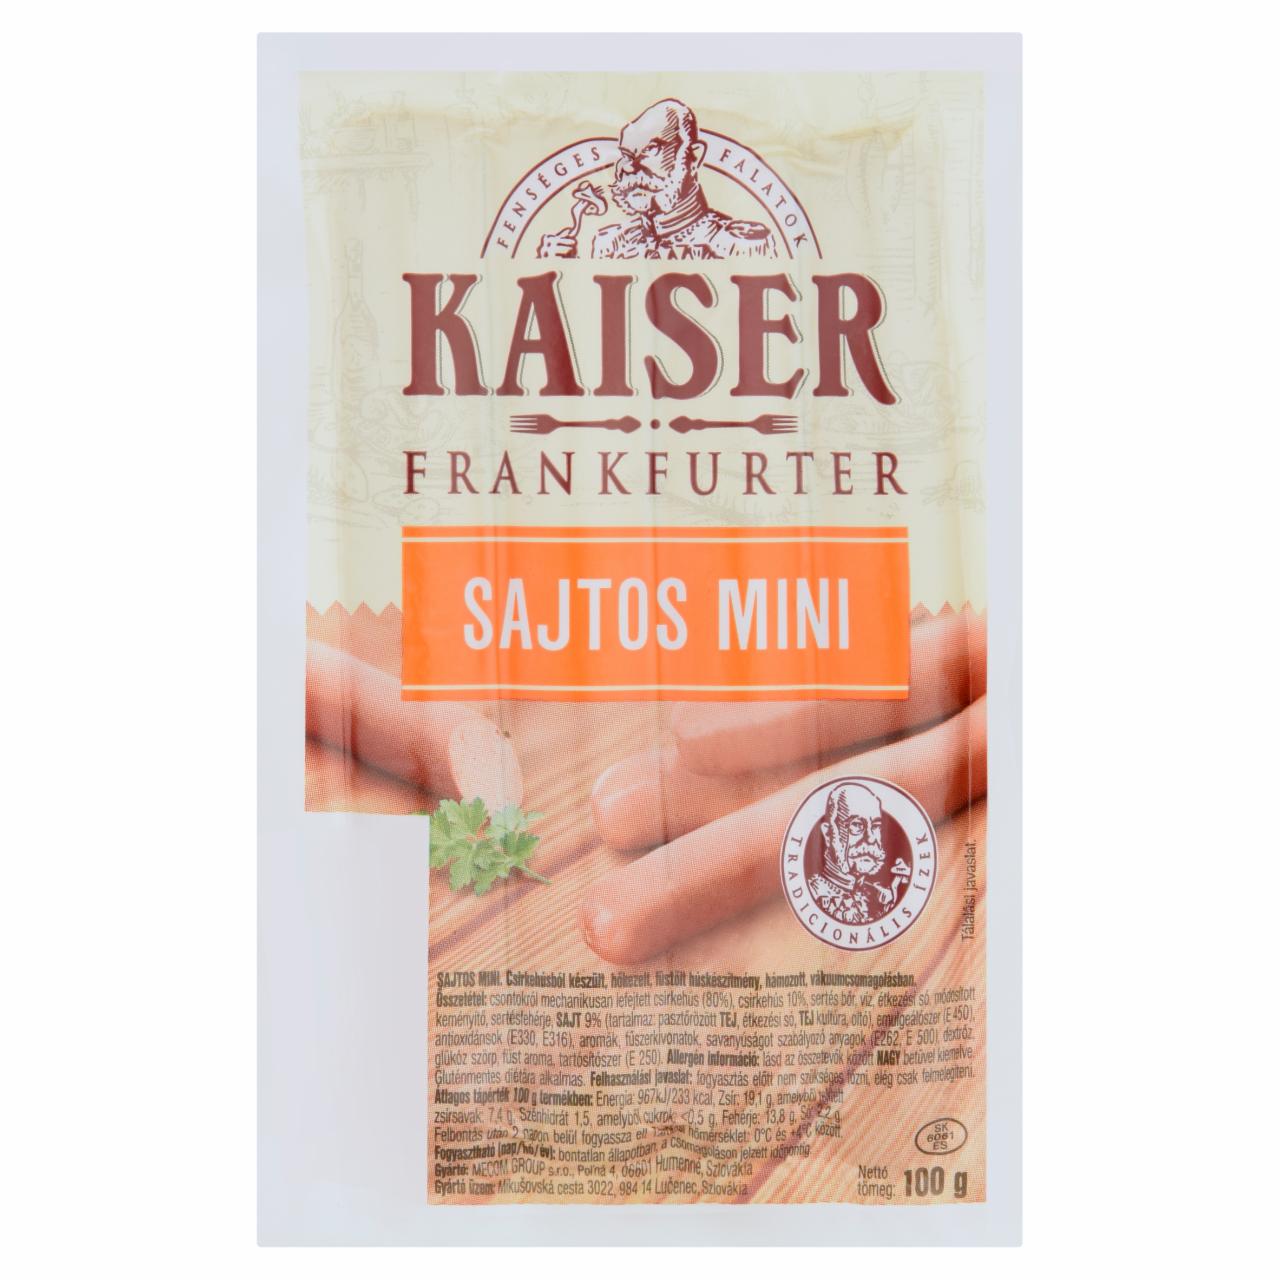 Képek - Kaiser frankfurter sajtos mini 100 g